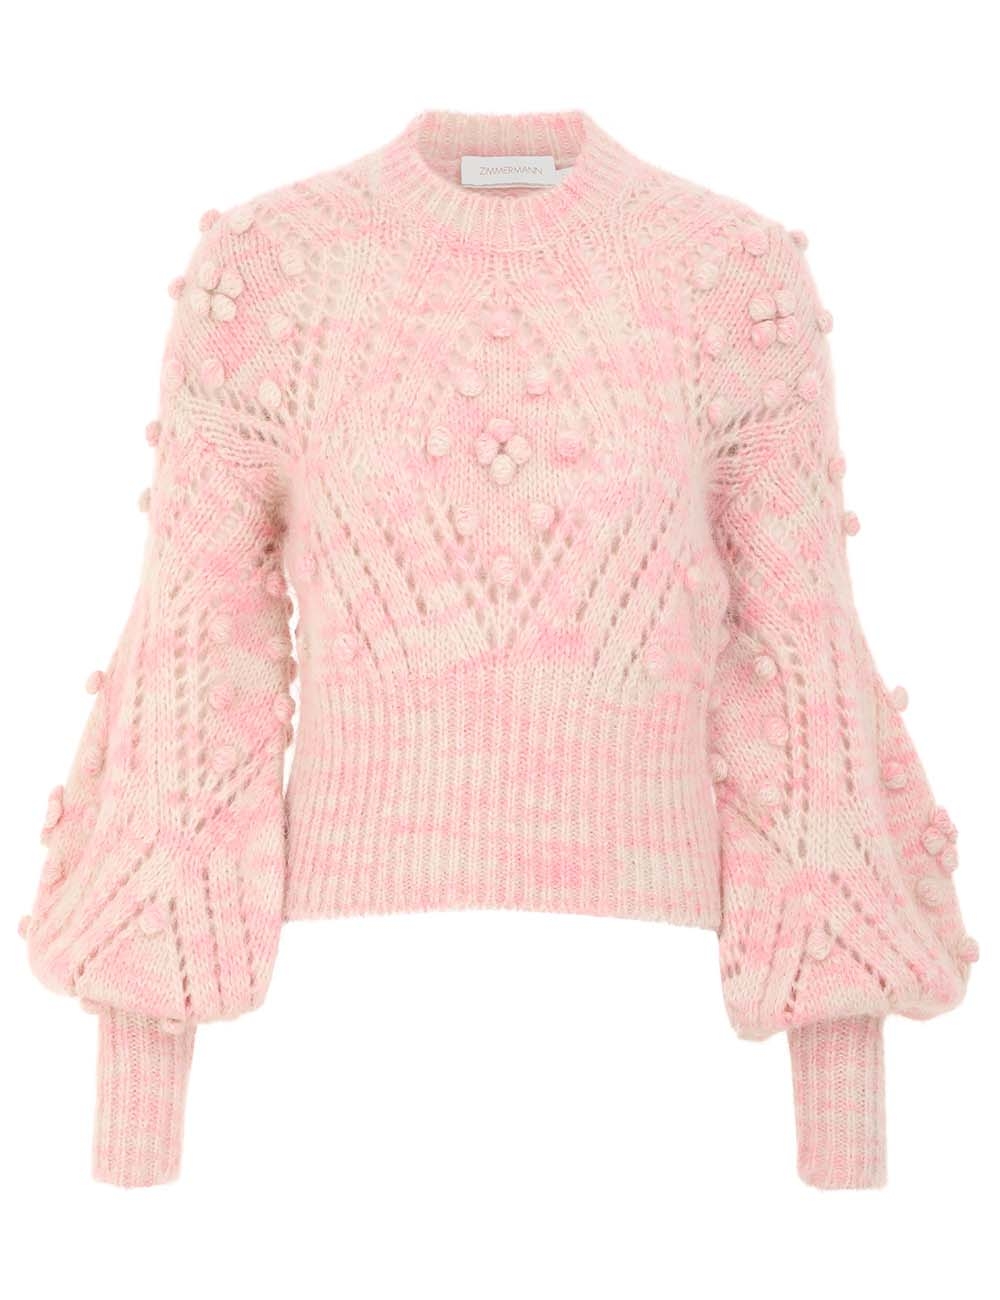 KIDS FASHION Jumpers & Sweatshirts Hoodie discount 56% Name it sweatshirt Pink 104                  EU 